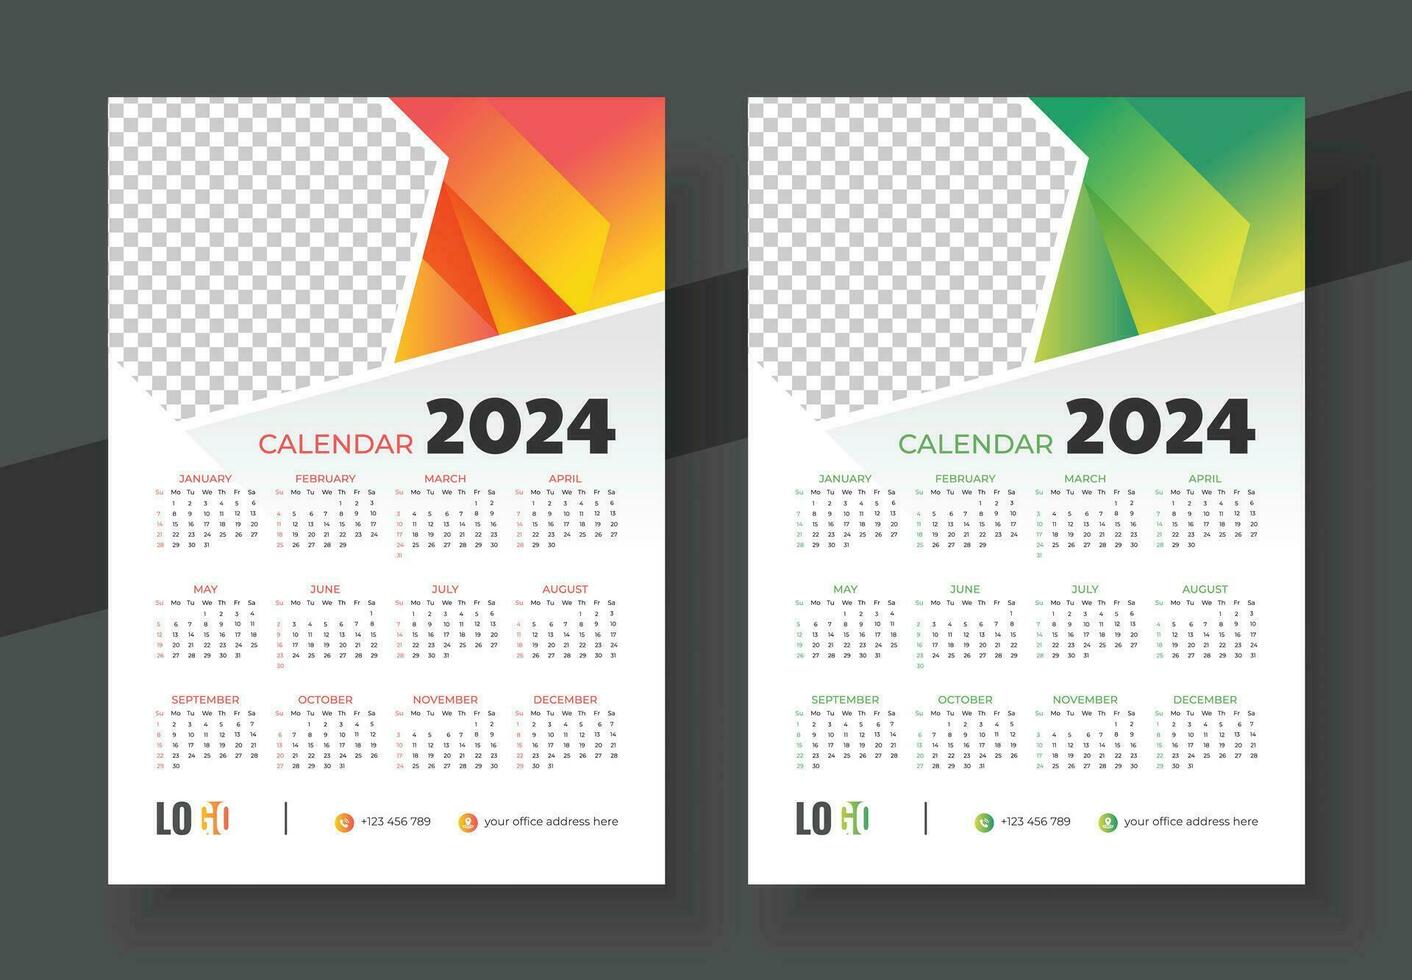 Calendar 2024 Template Design, One page wall calendar design for 2024. Week starts on Sunday vector